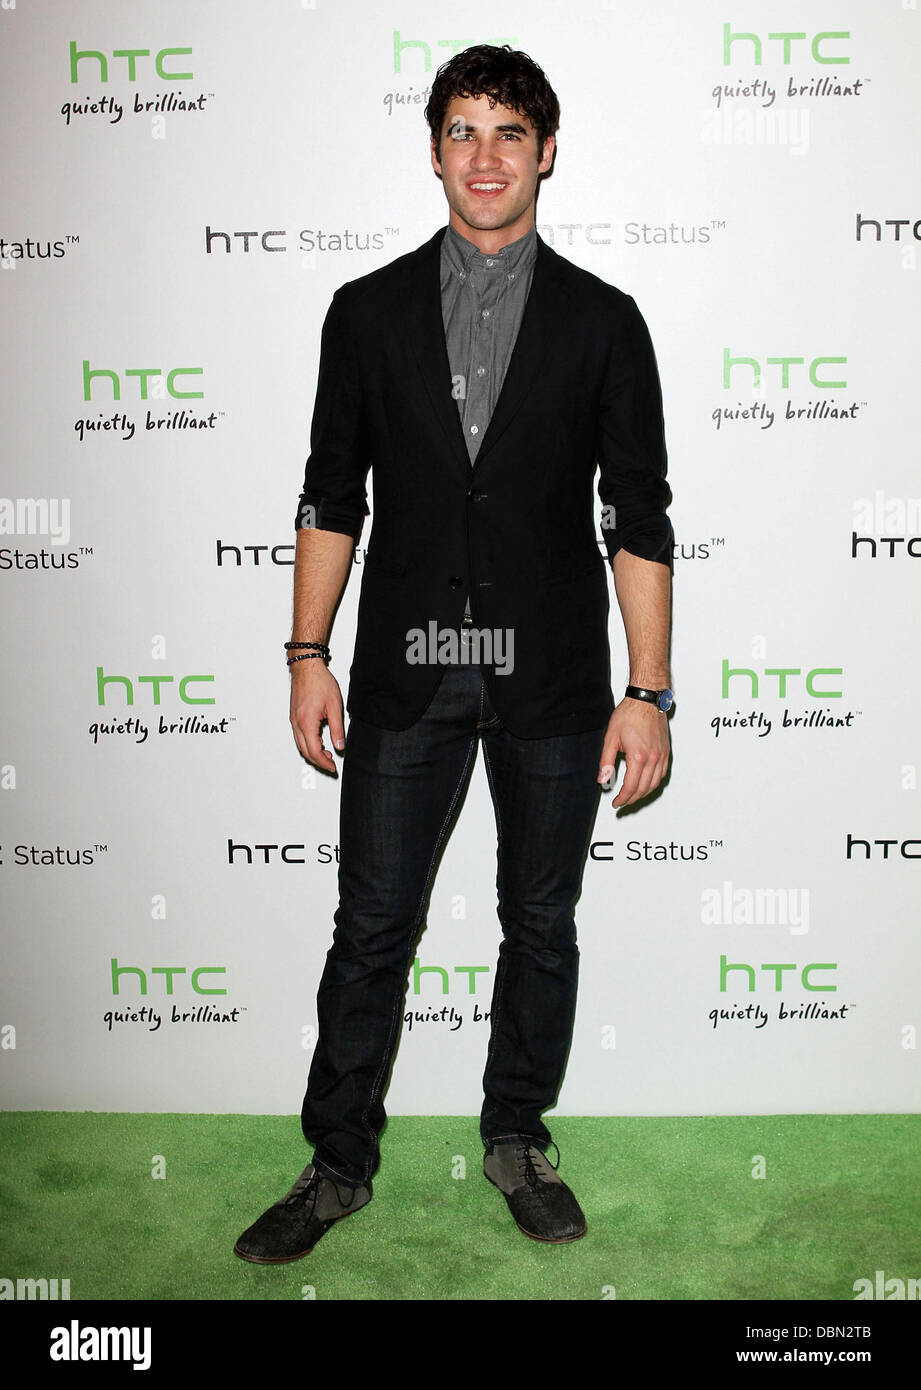 Darren Criss The HTC Status Social launch event held at Paramount Studios - Arrivals Los Angeles, California - 19.07.11 Stock Photo